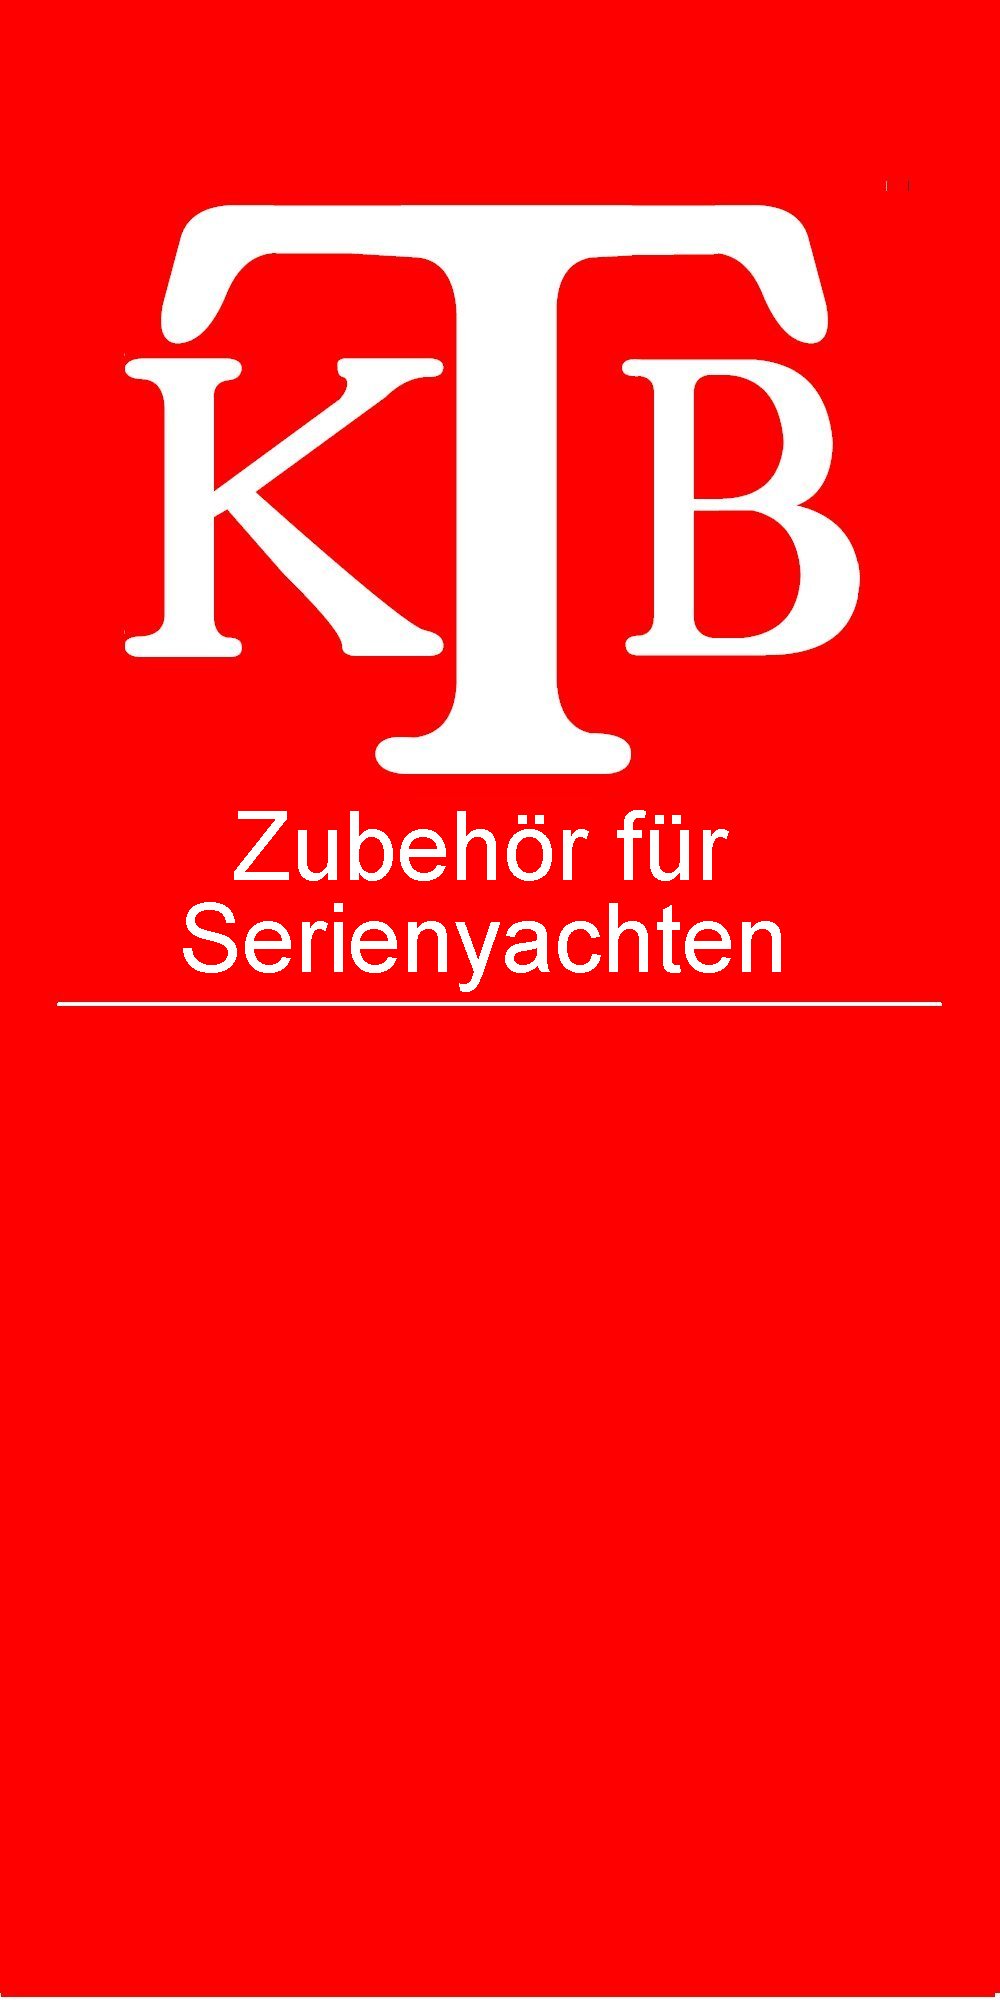 Serienyachten Logo